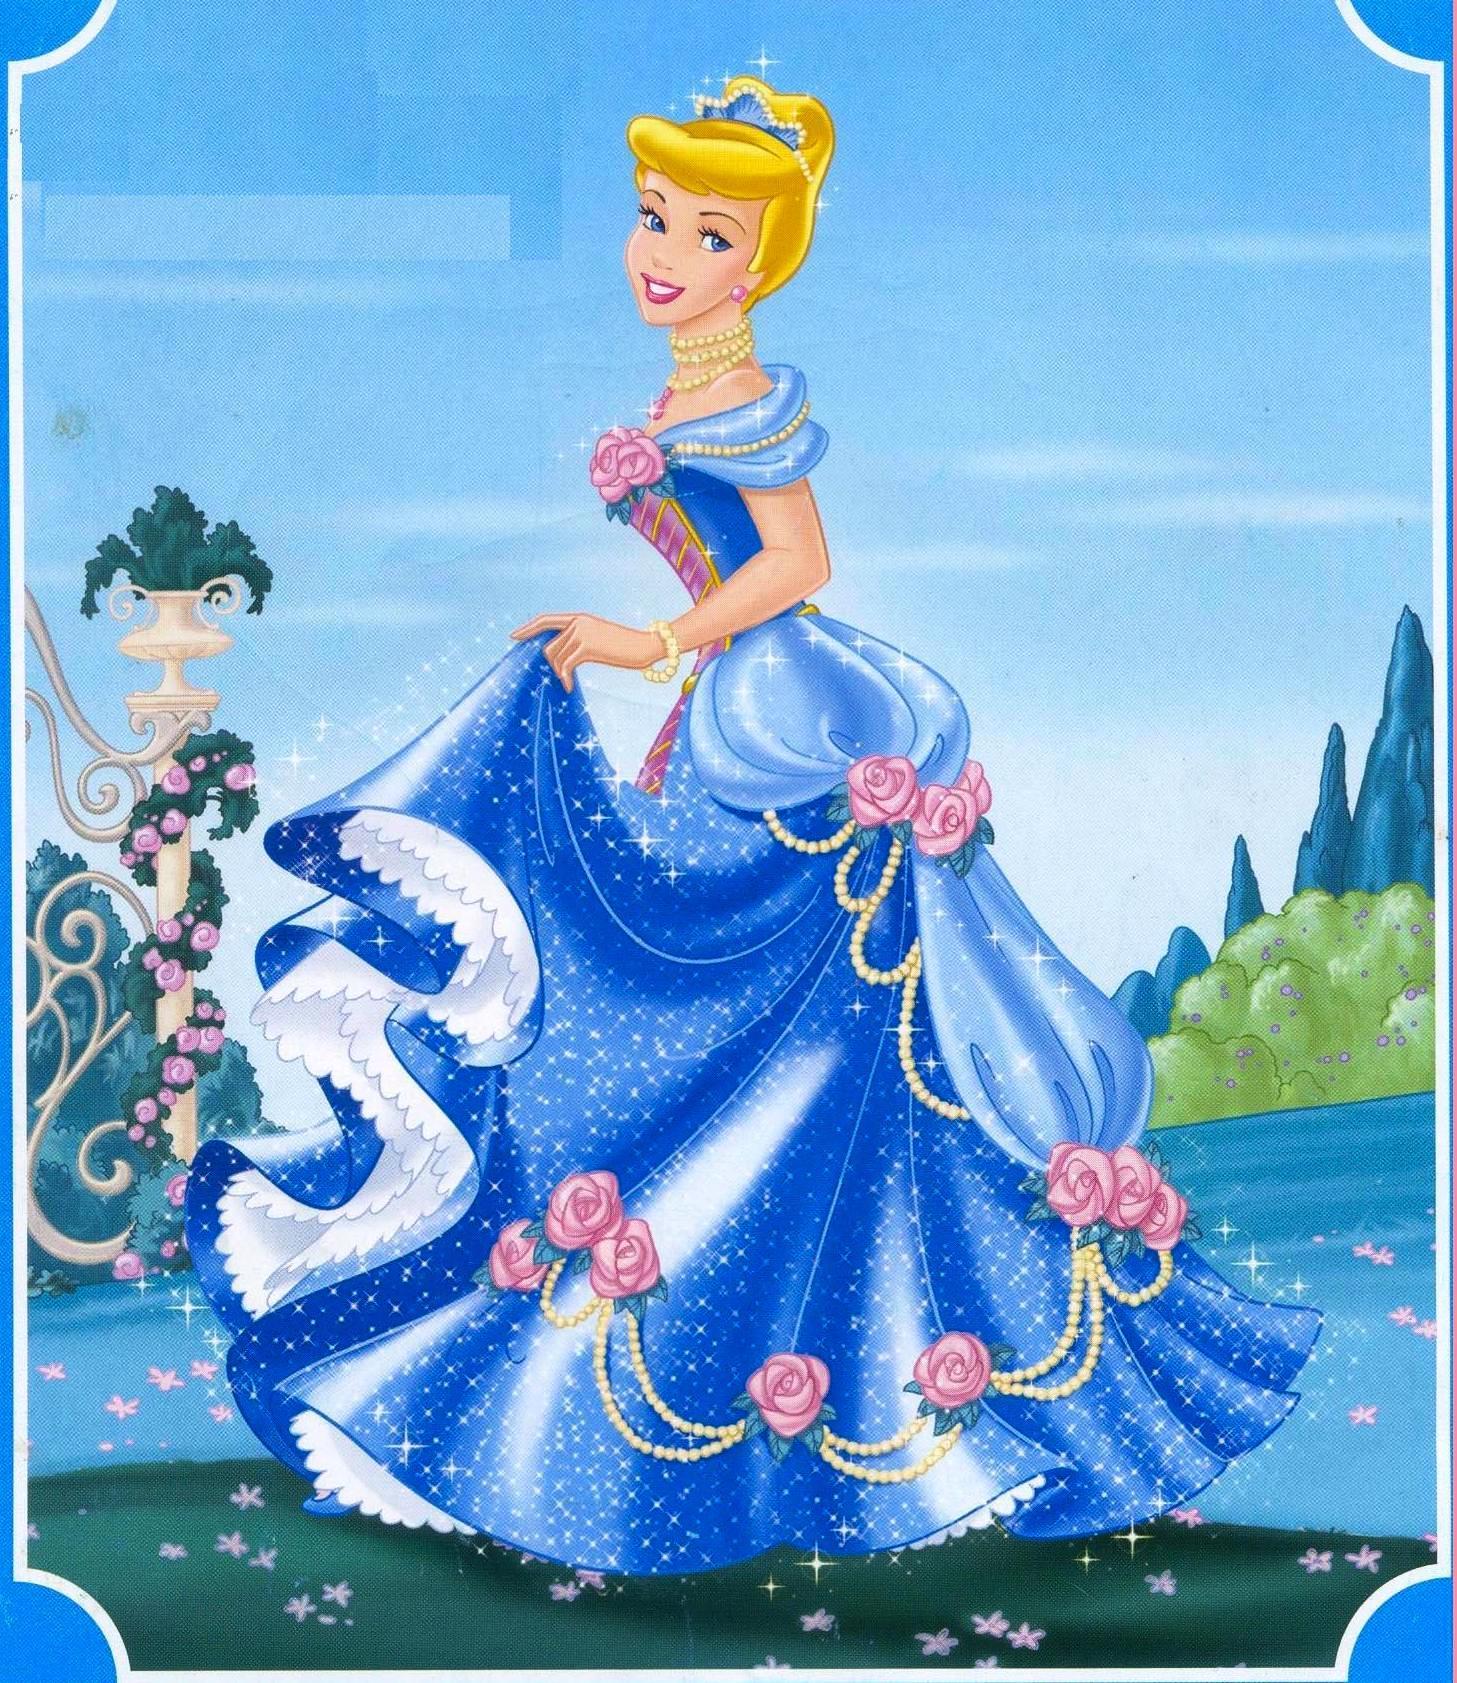 Princess Cinderella Disney Princess Photo 6333529 Fanpop 26656 Hot